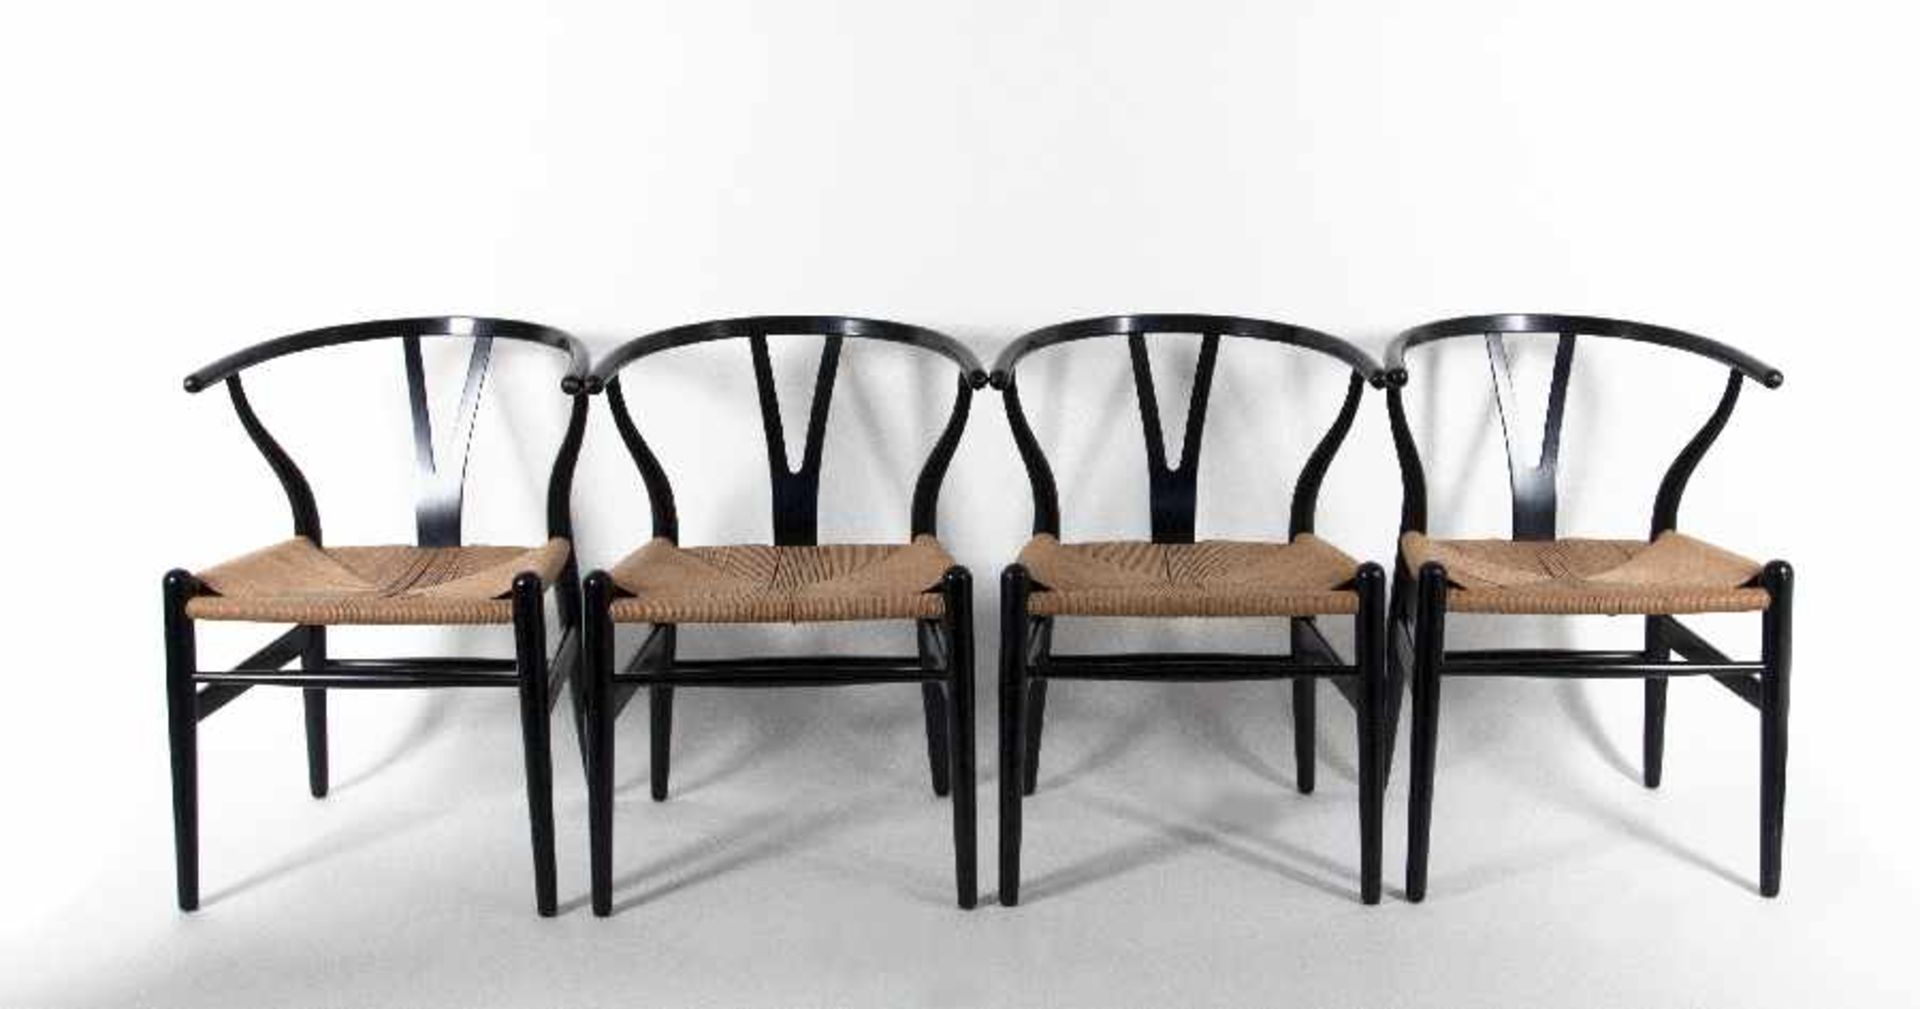 Hans J. Wegner1914 - 20074 CH-24 chairs (Wishbone-chairs)Wood, painted black, bast wickerwork,